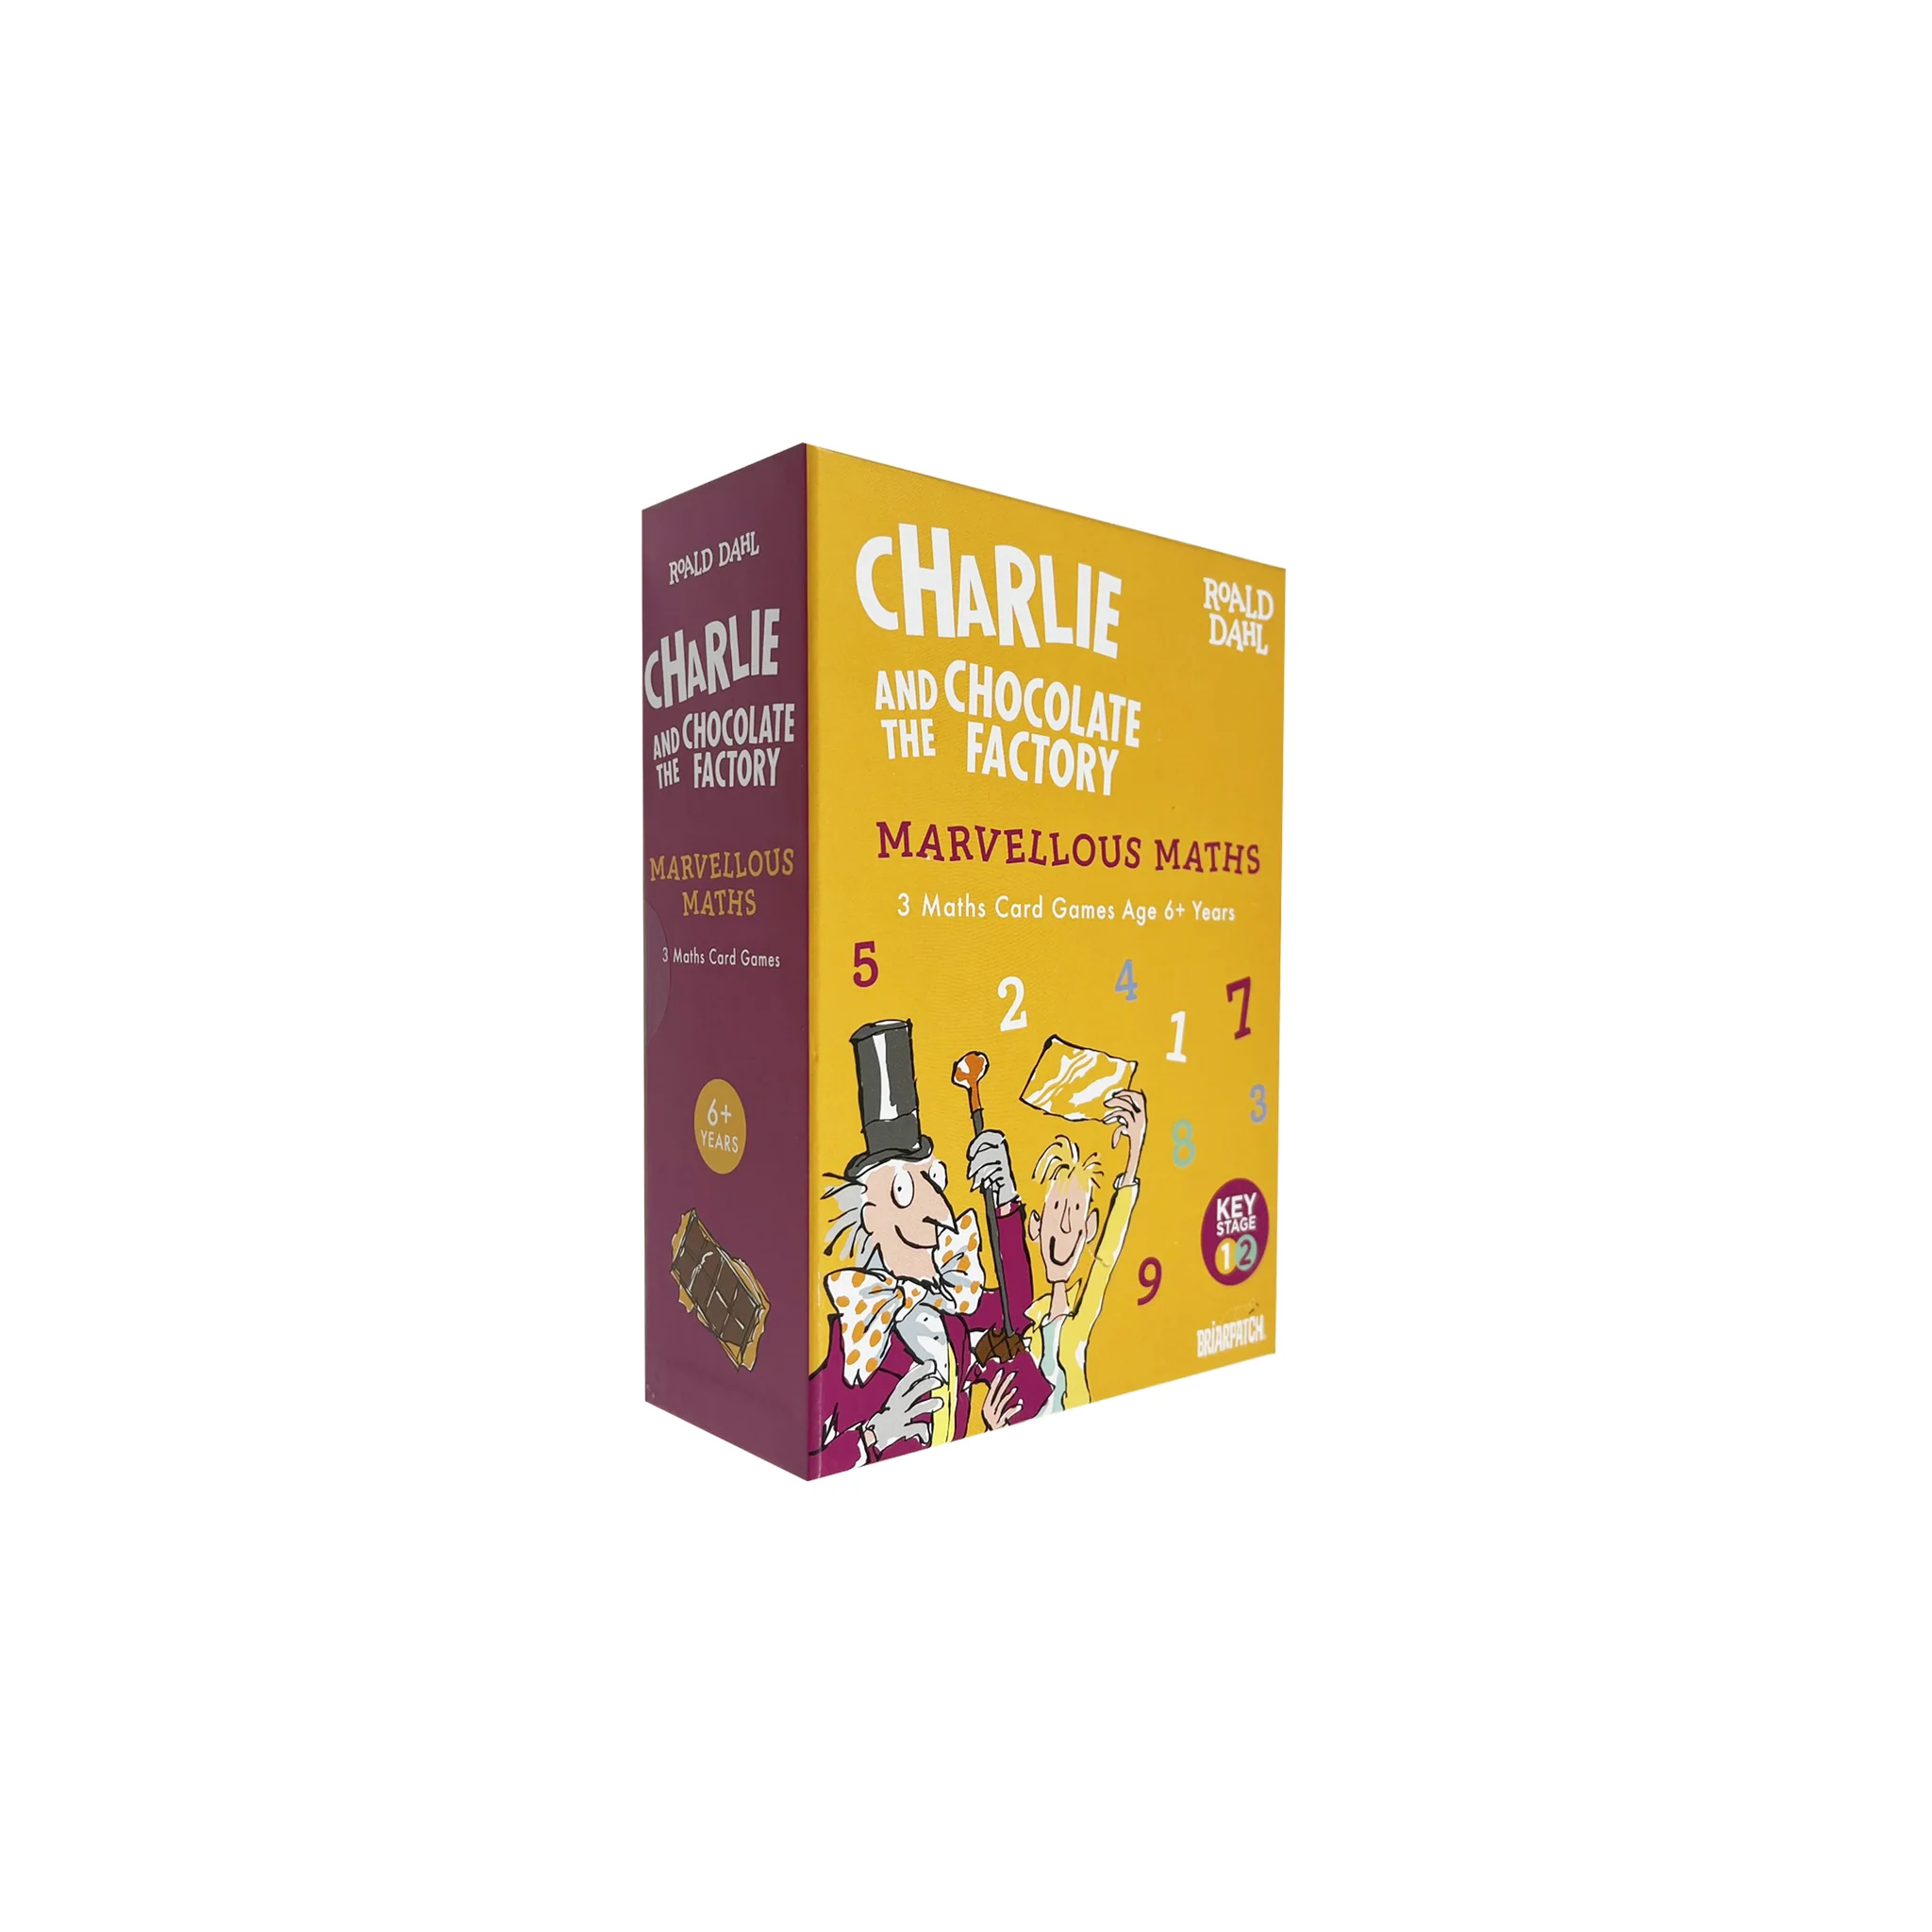 Roald Dahl Charlie & The Chocolate Factory Marvellous Maths Card Game